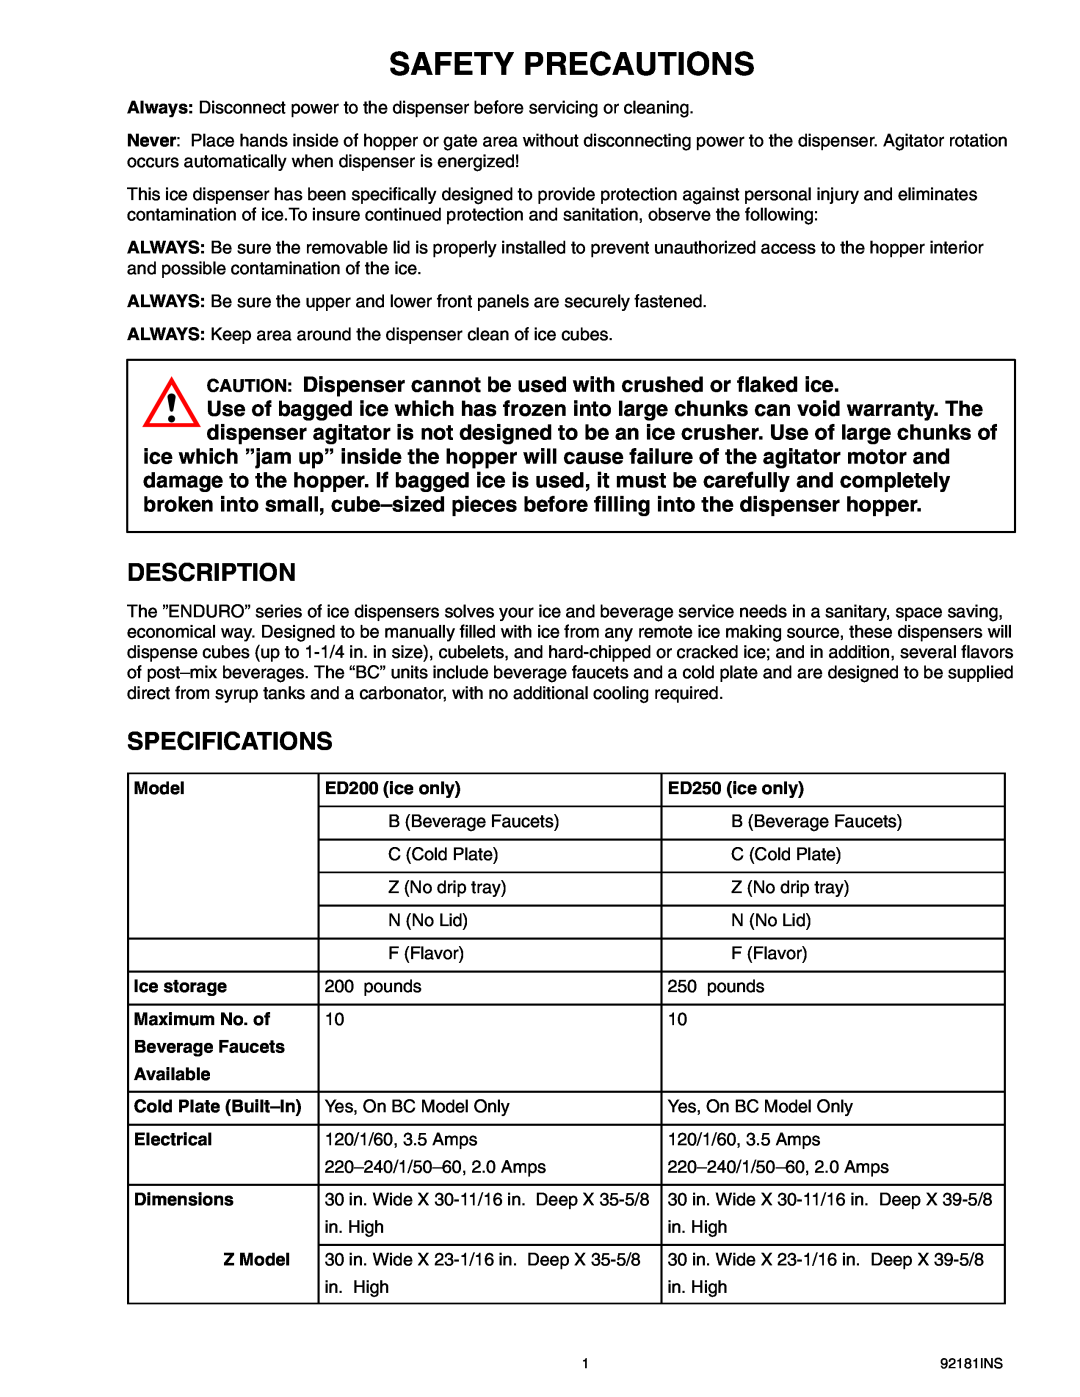 Cornelius Enduro-200/250 installation manual Safety Precautions, Description, Specifications 